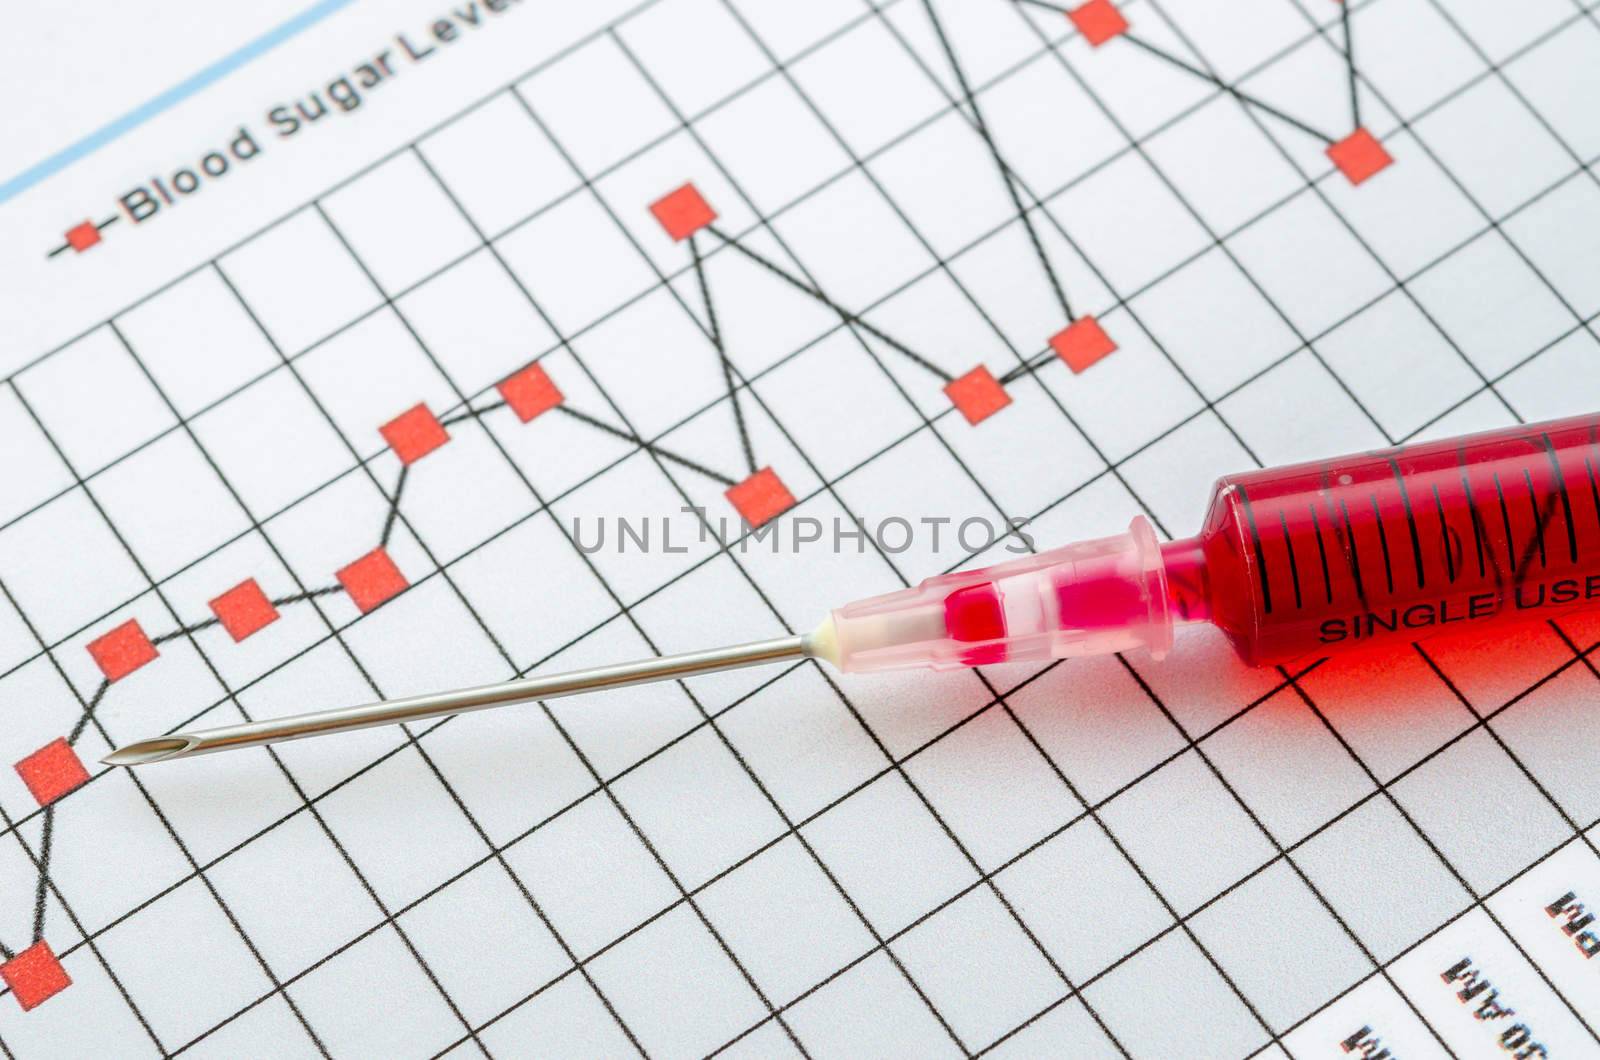 Sample blood for screening diabetic test in syringe. by Gamjai